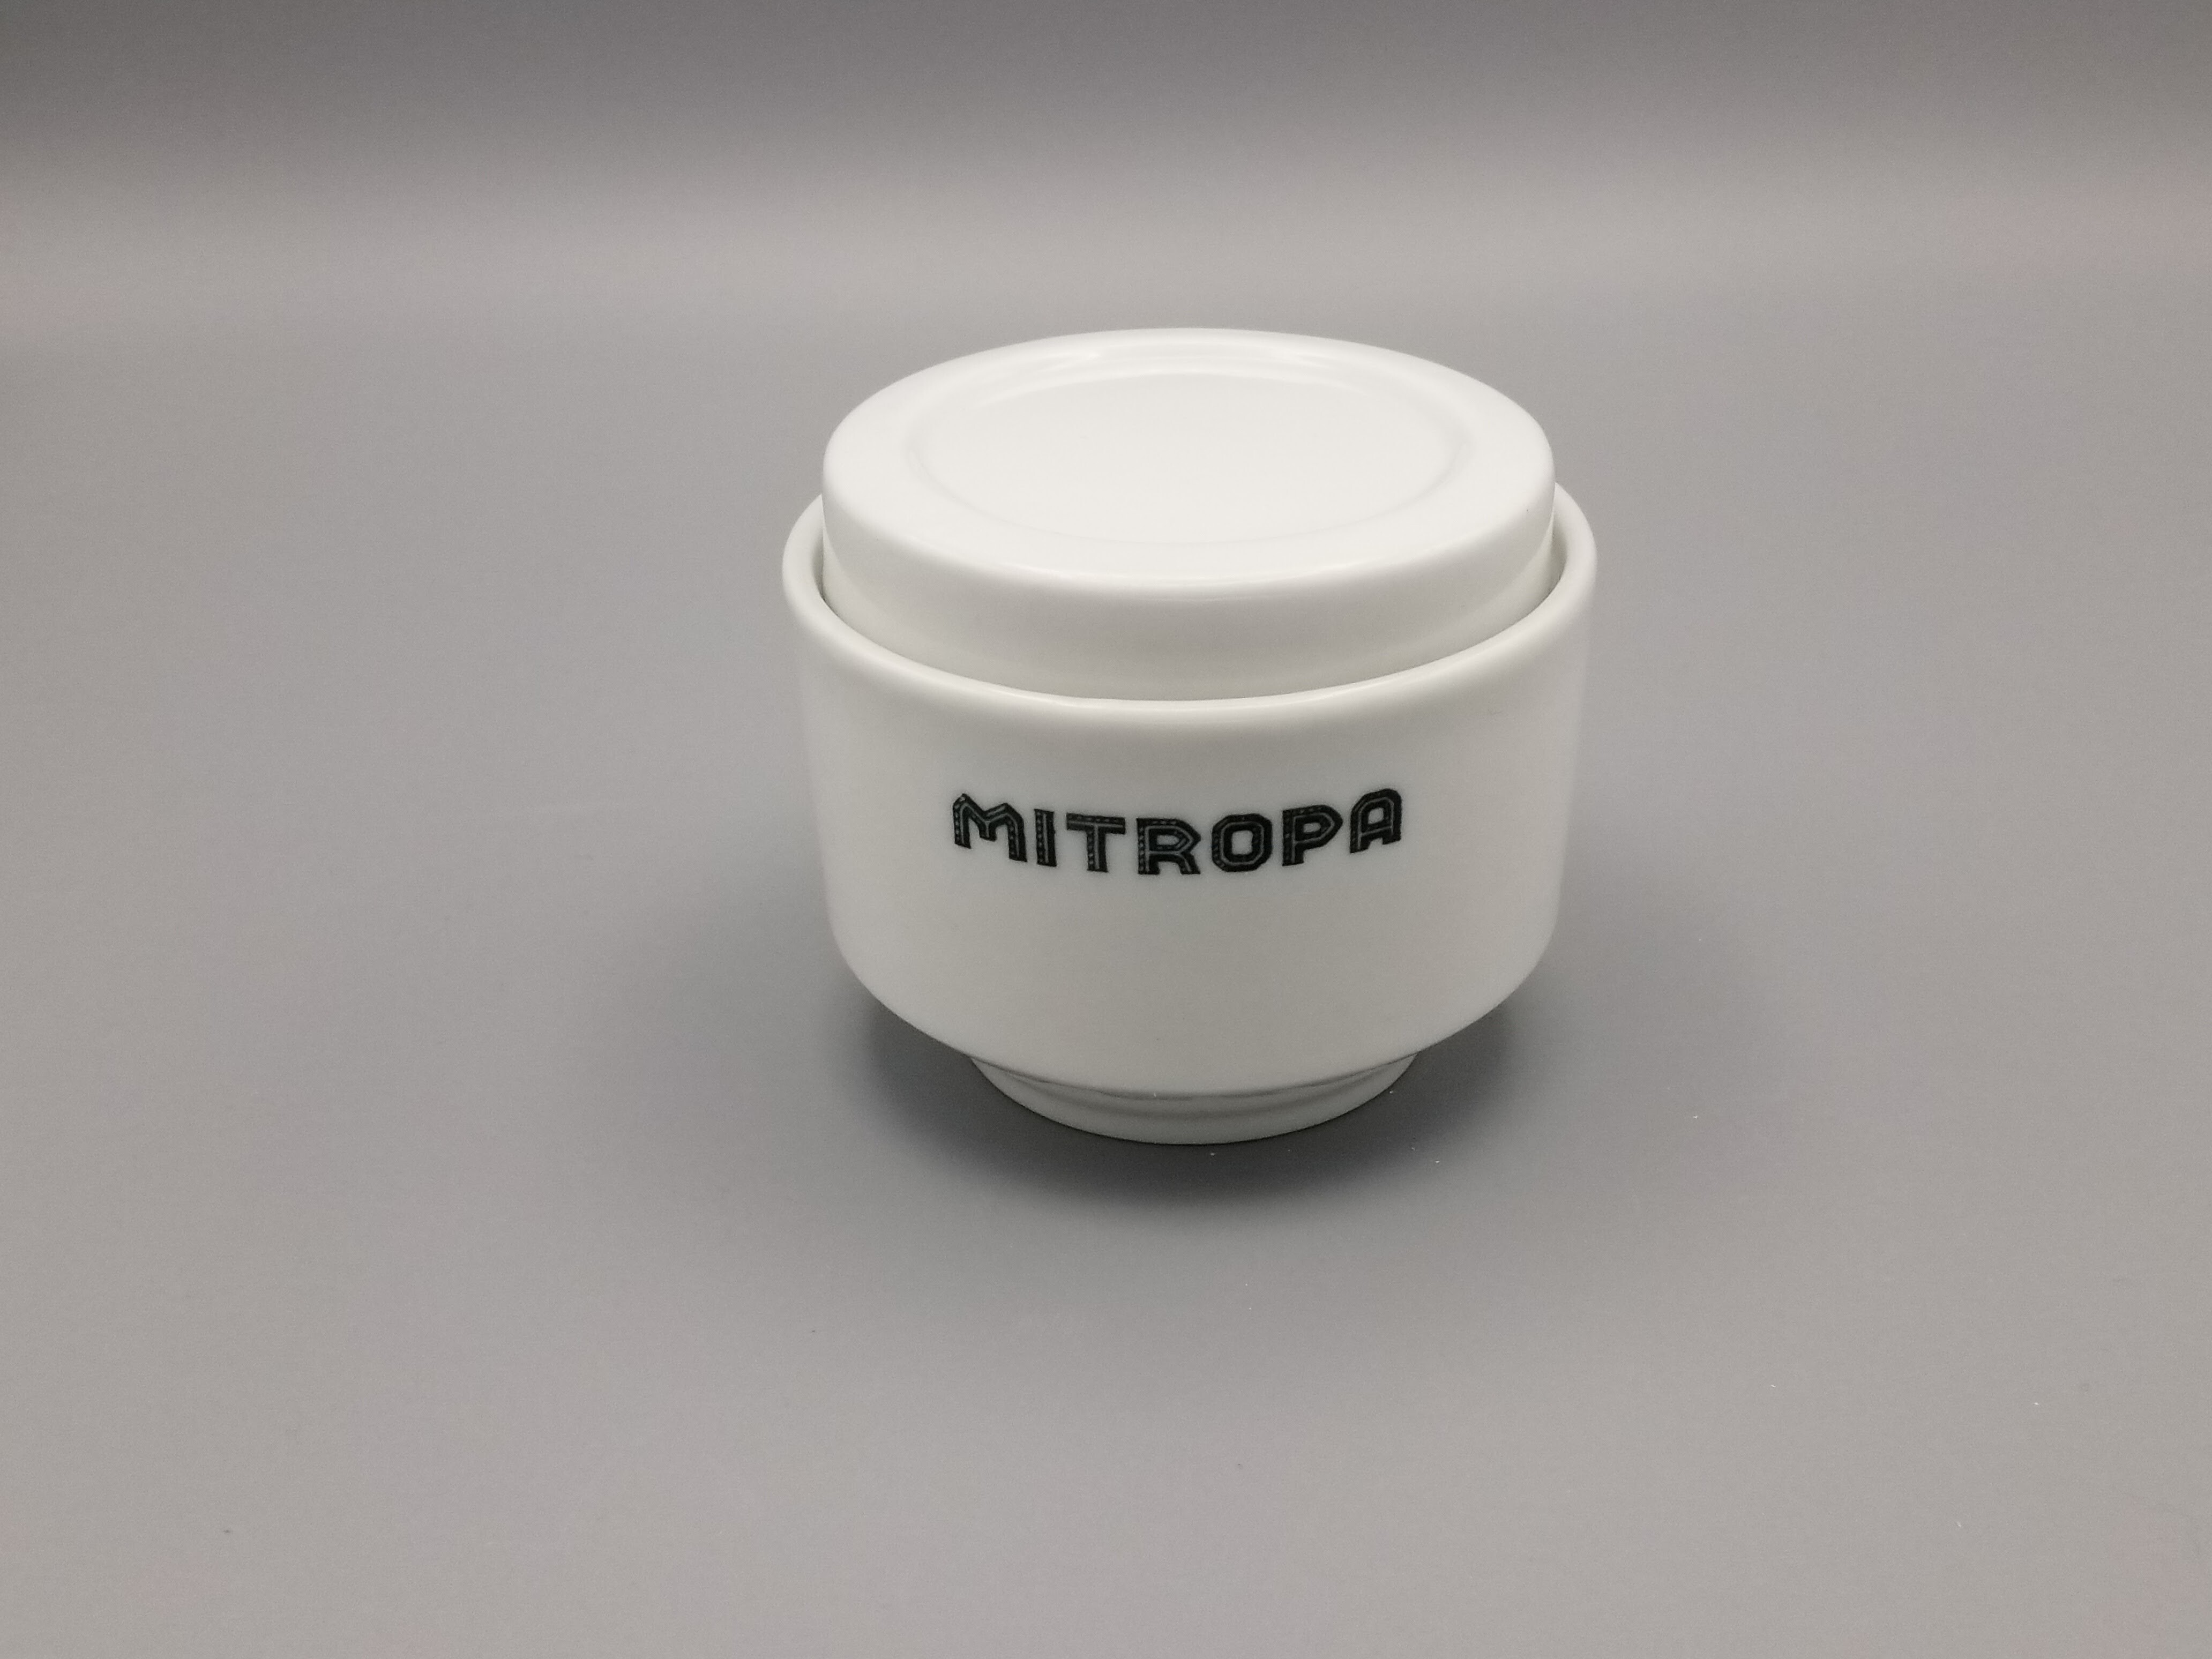 MITROPA Zuckerdose (Mobile Welten e.V. CC BY-SA)